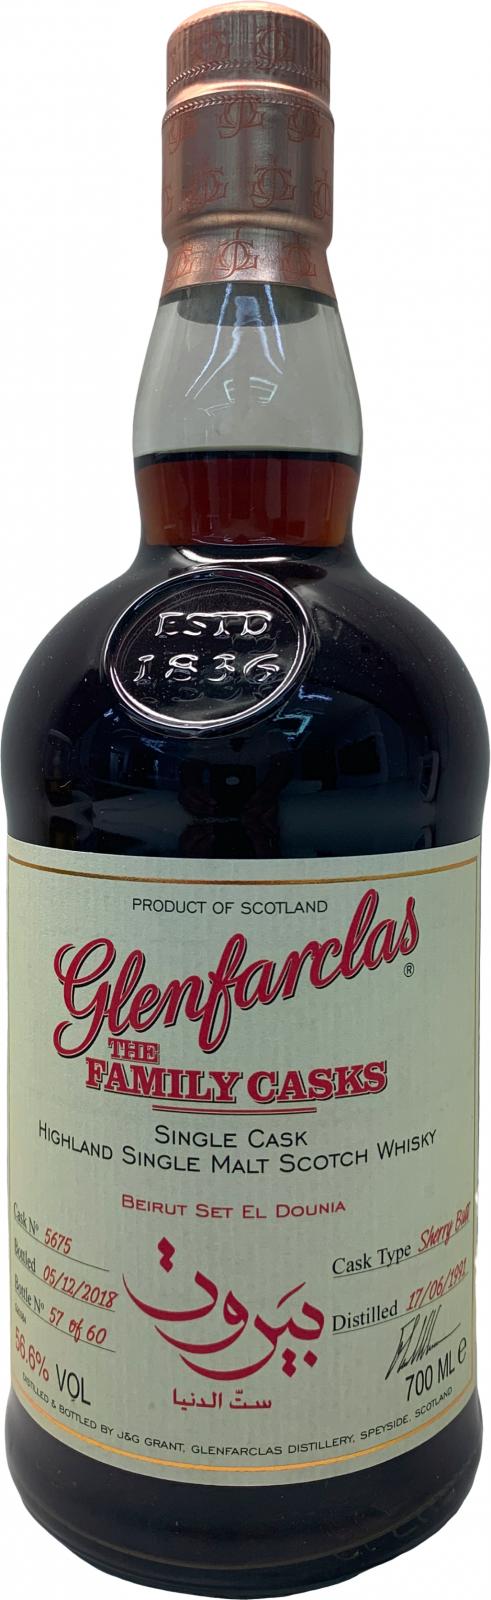 Glenfarclas 1991 The Family Casks Sherry Butt #5675 56.6% 700ml